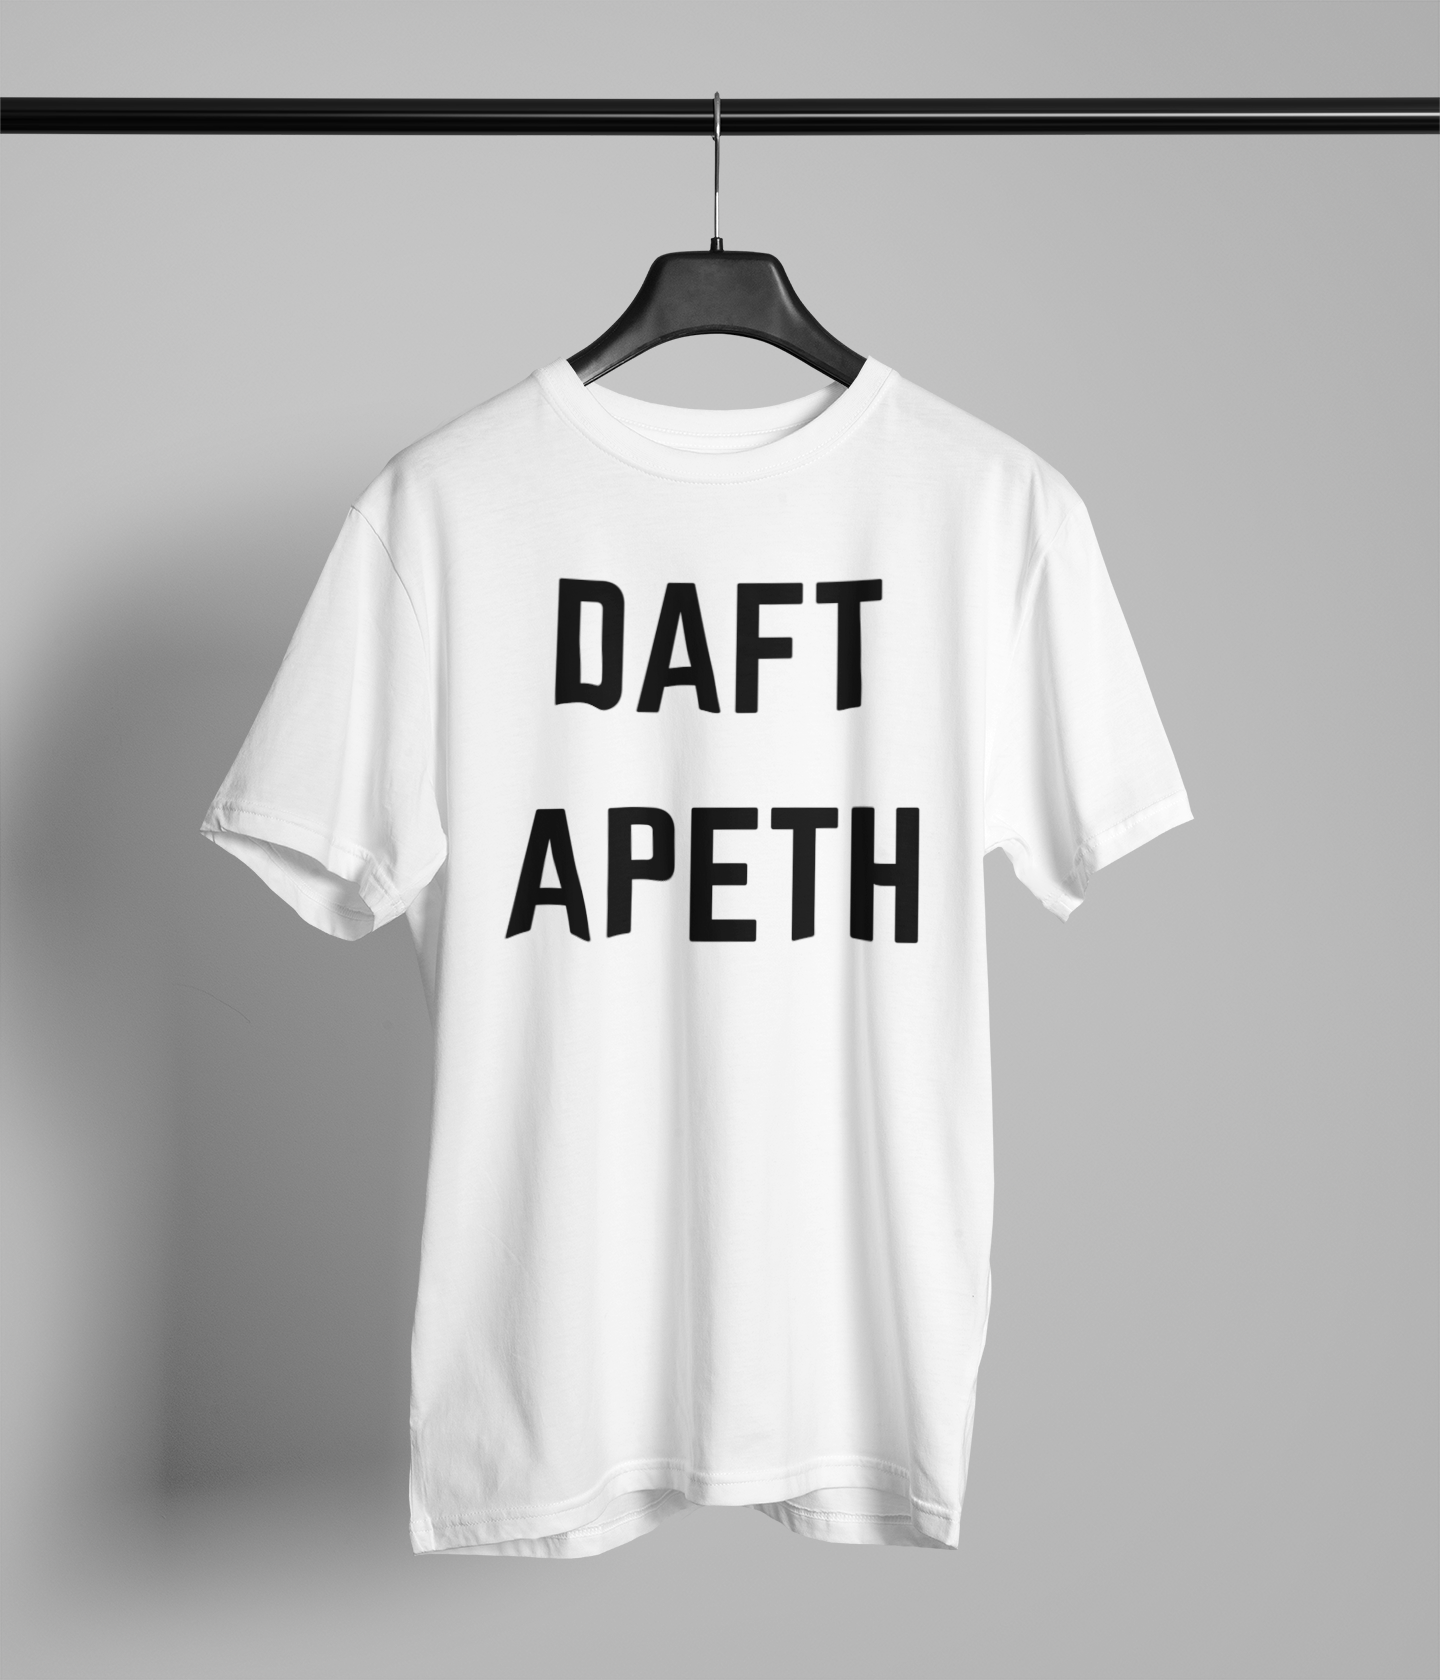 DAFT APETH Northern Slang T-Shirt Unisex